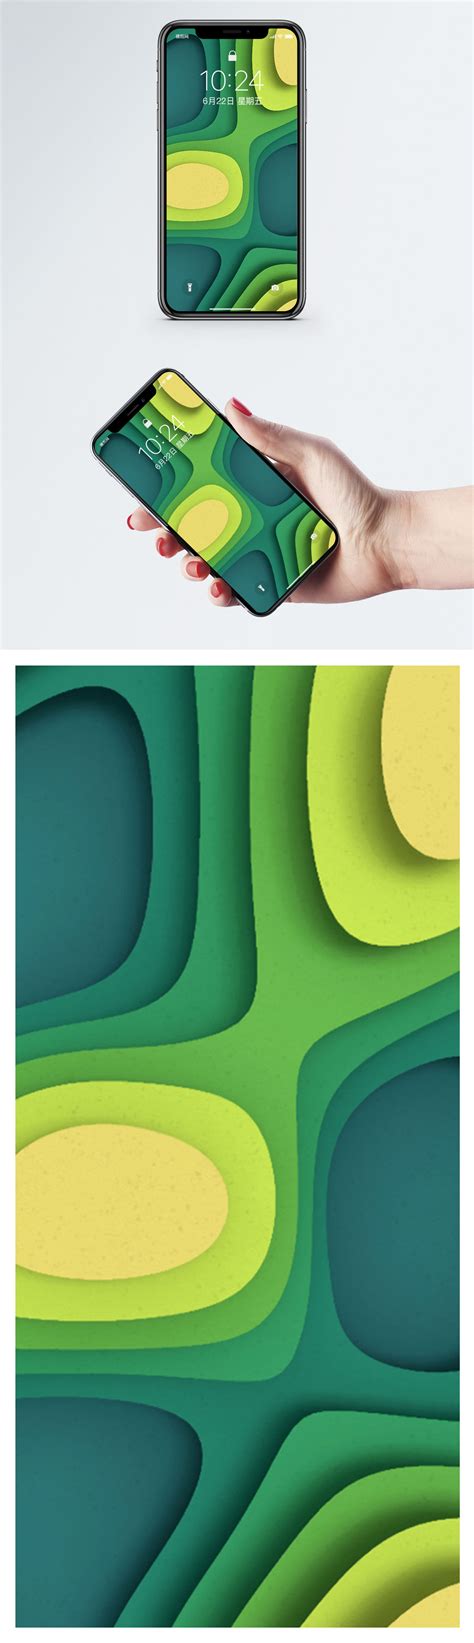 creative paper cut mobile phone wallpaper wallpaper background images    lovepik